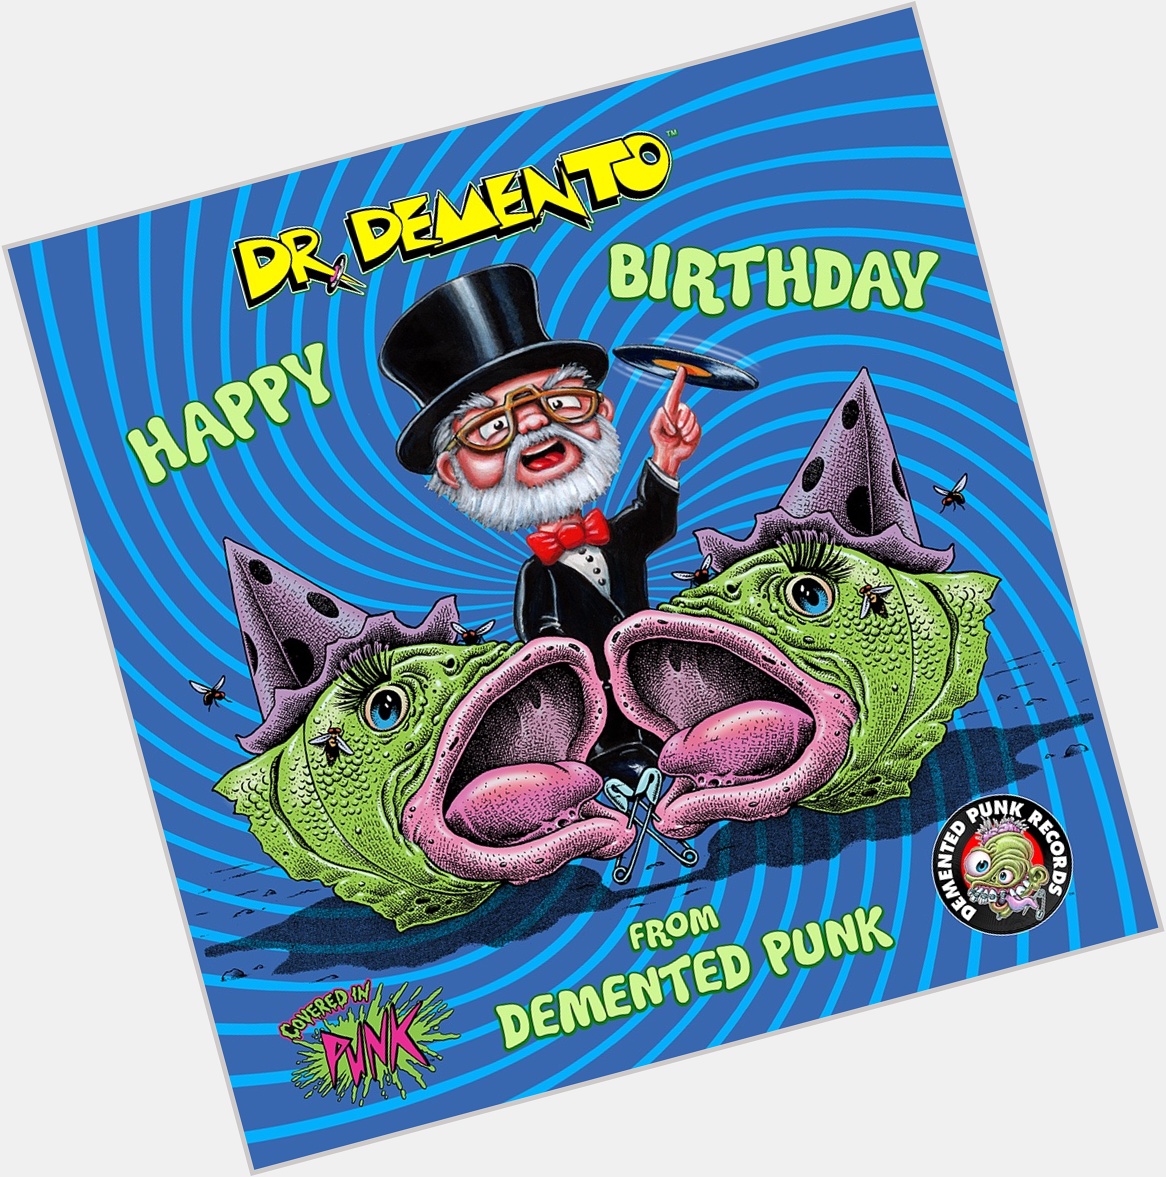 HAPPY 80th BIRTHDAY DR. DEMENTO!  